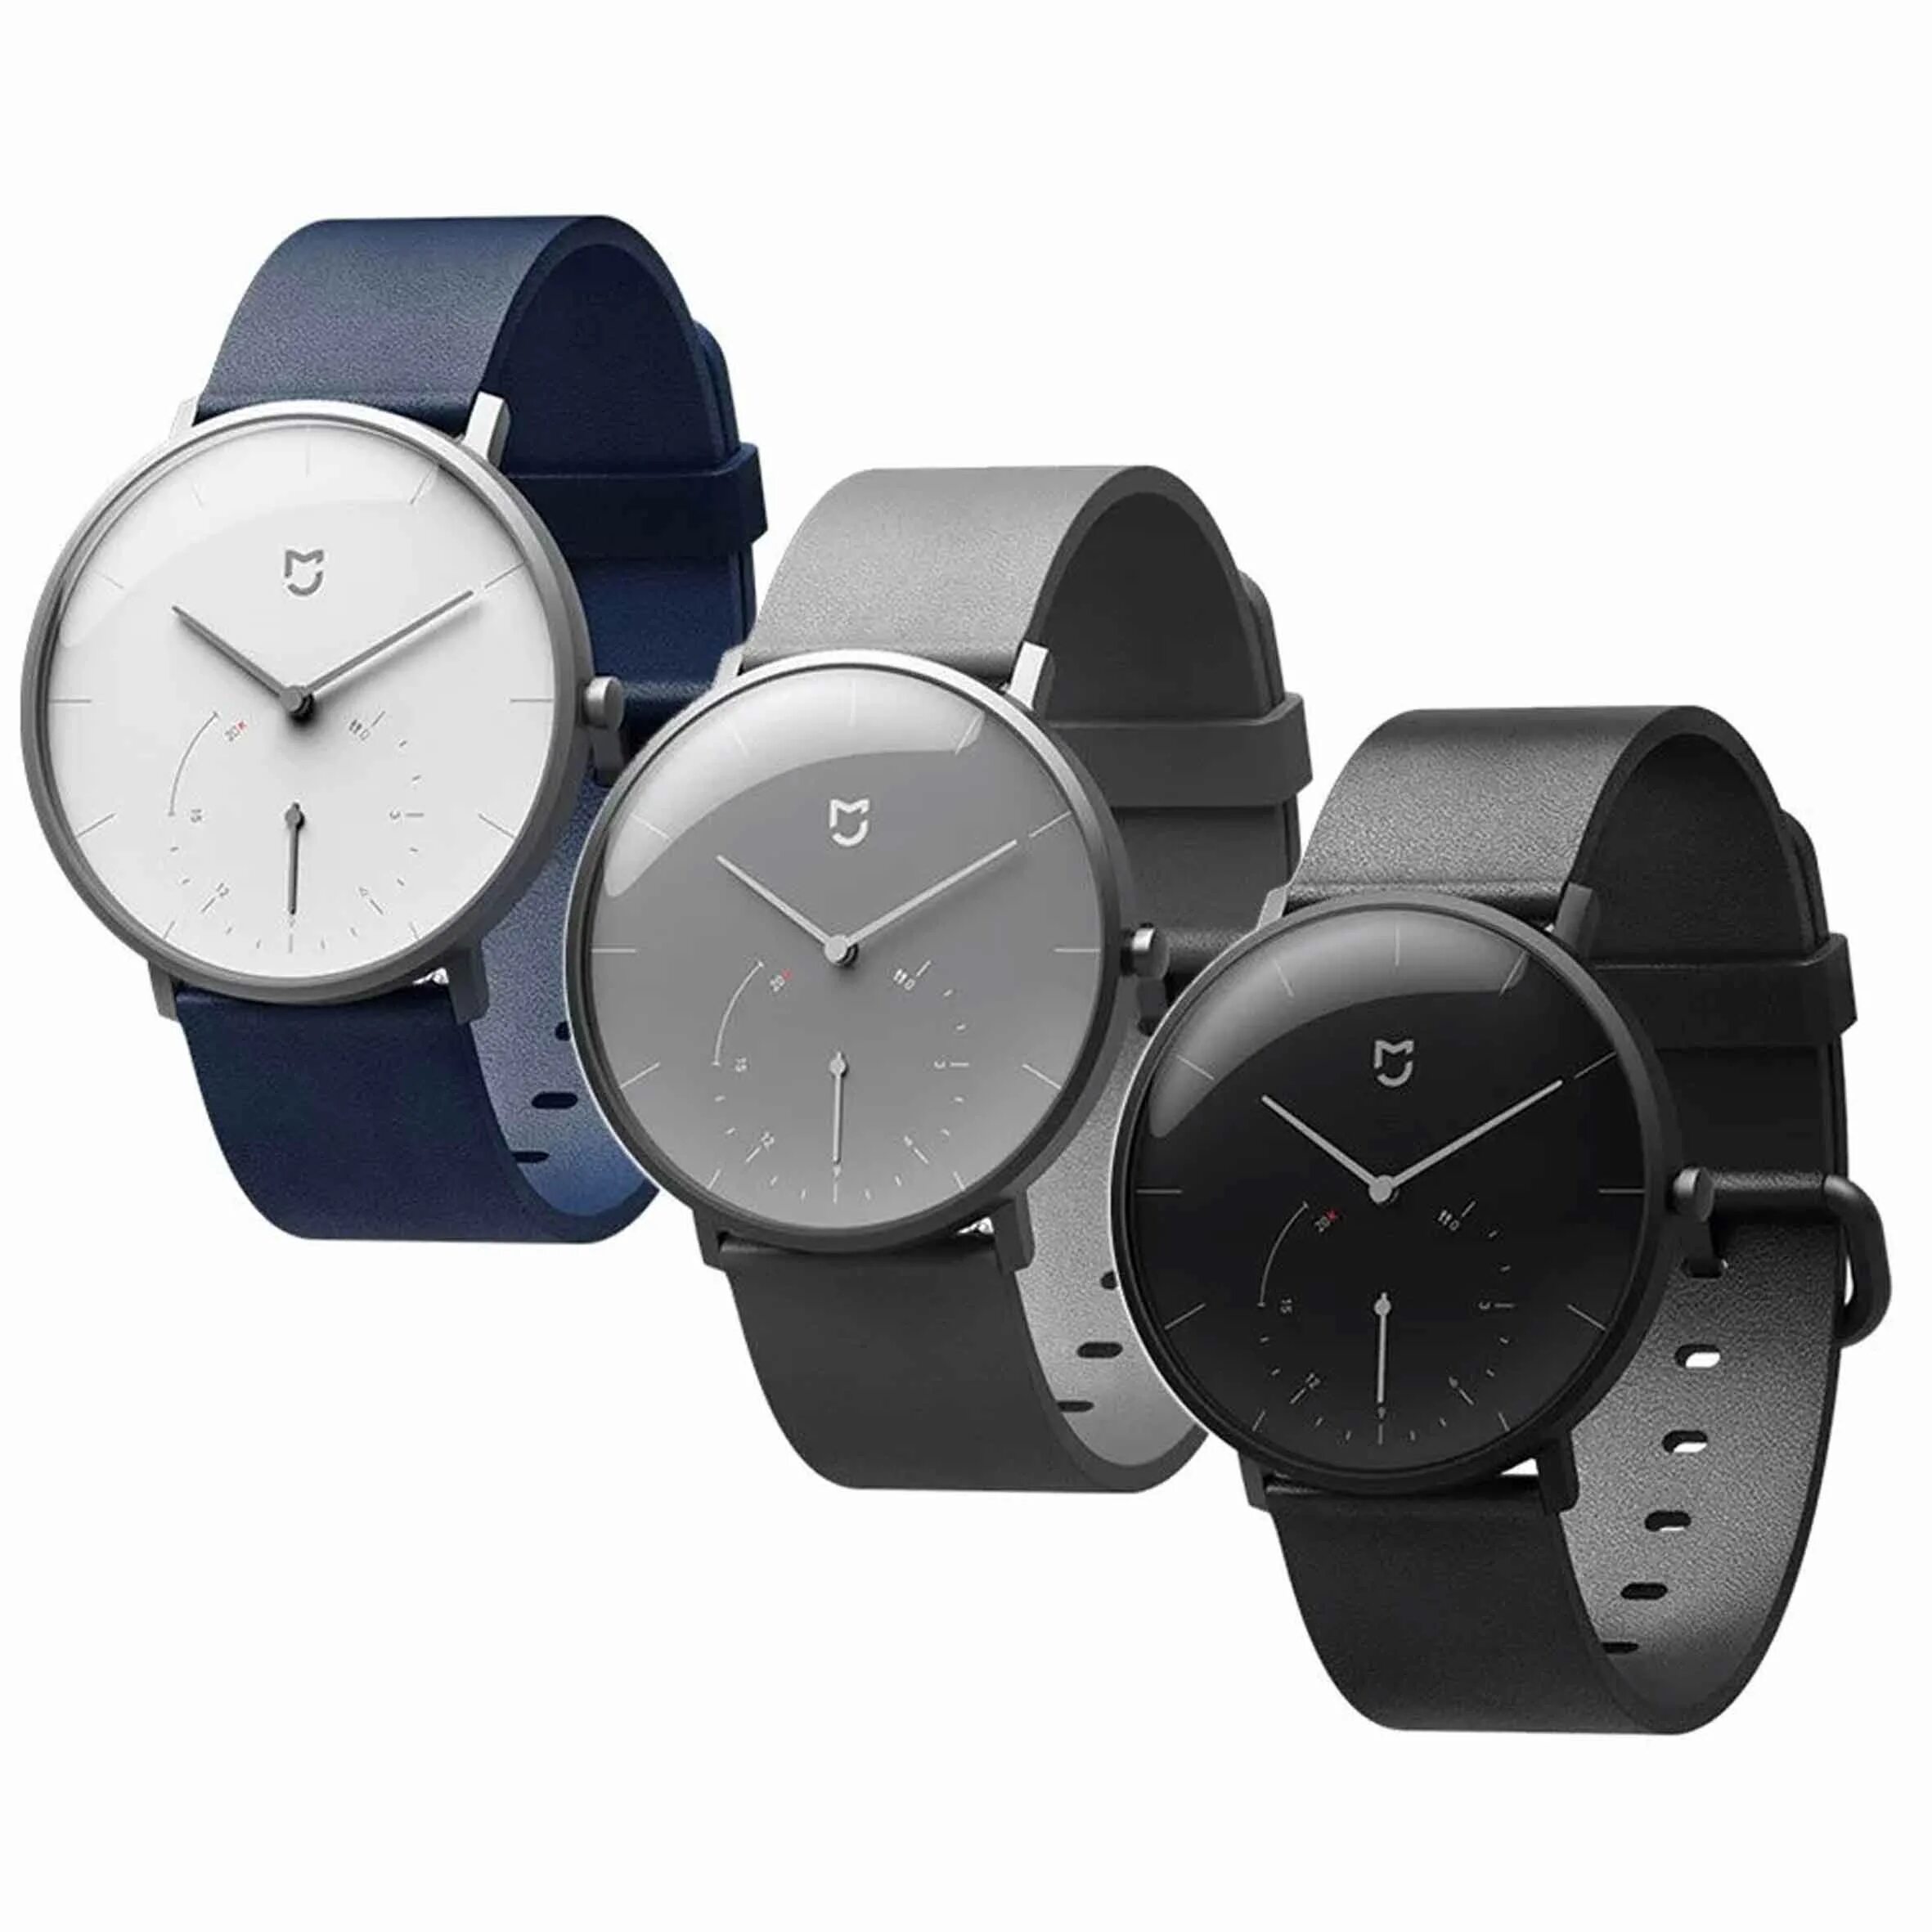 Xiaomi mijia часы. Mijia Quartz watch. Xiaomi Quartz watch. Часы Xiaomi Mijia 4 g.